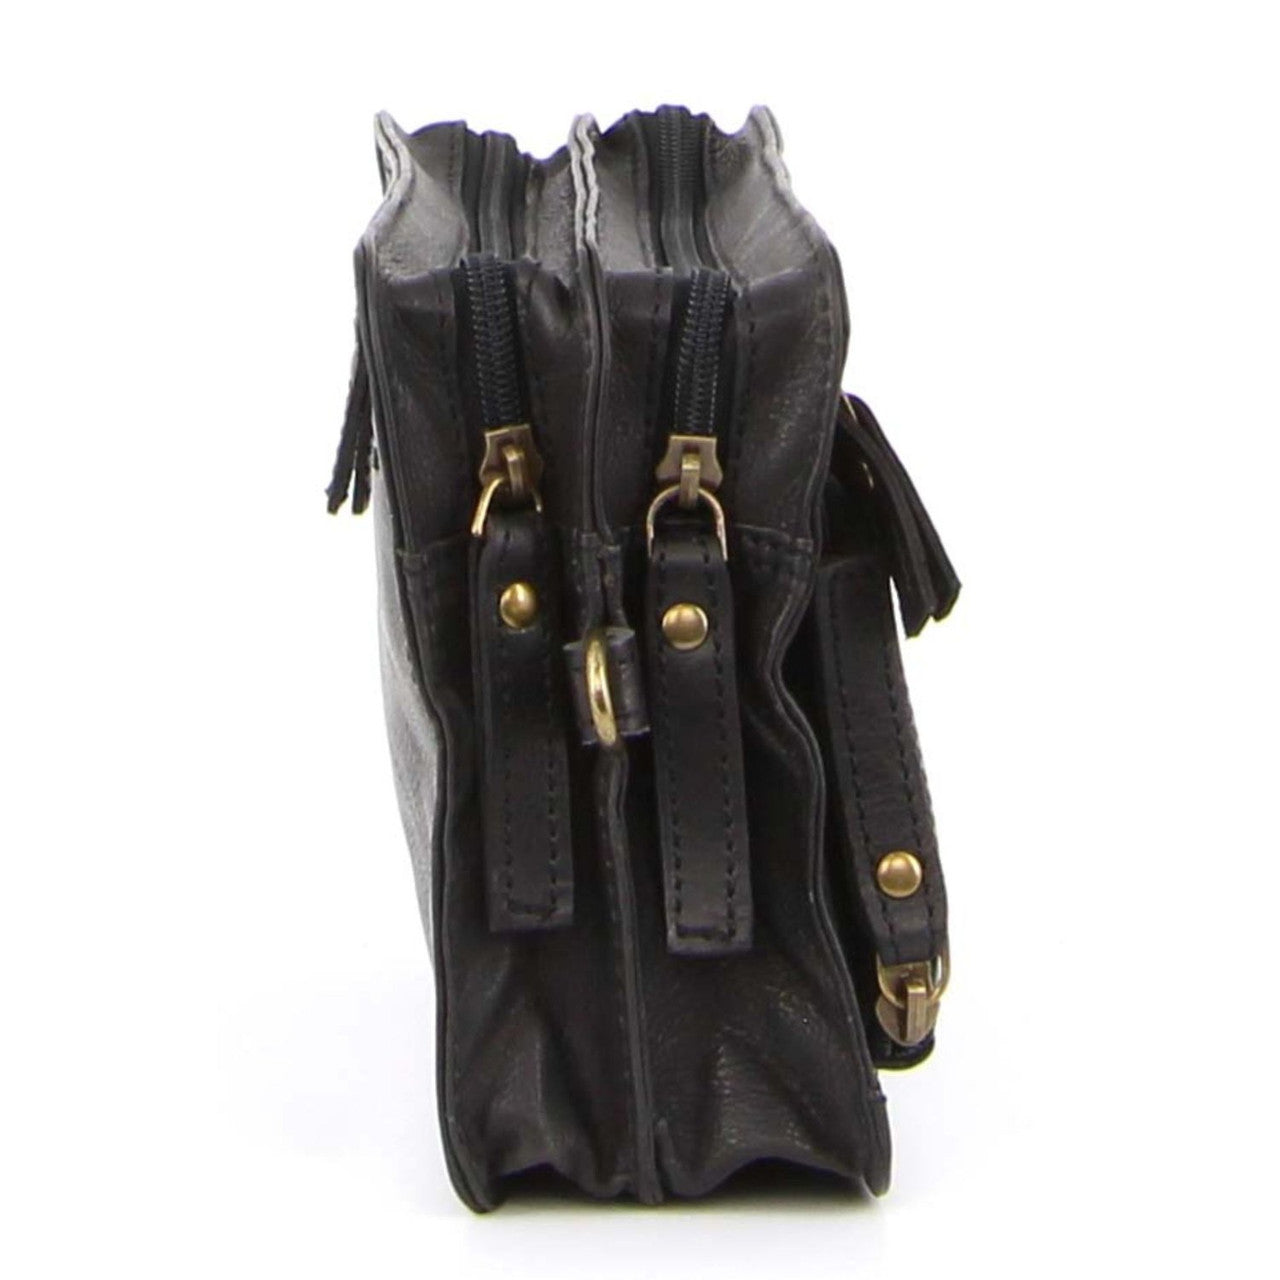 Pierre Cardin Rustic Leather Organizer Bag in Black